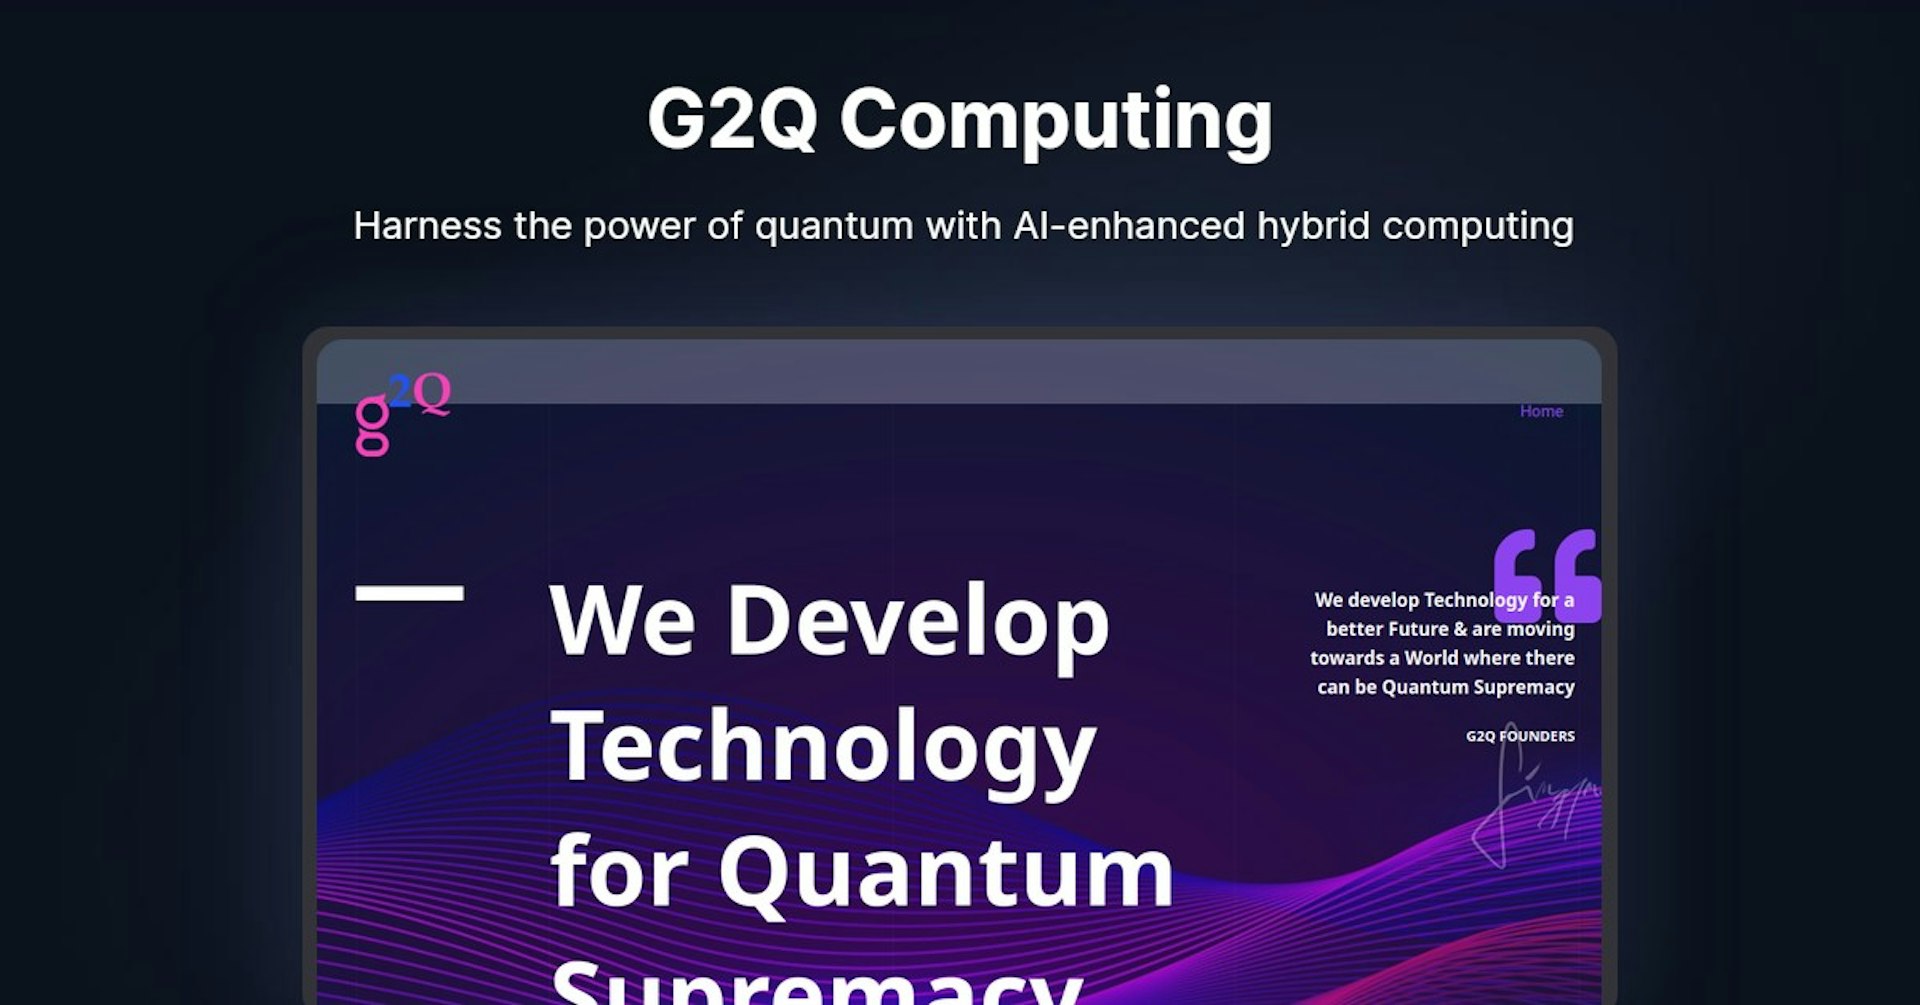 G2Q Computing